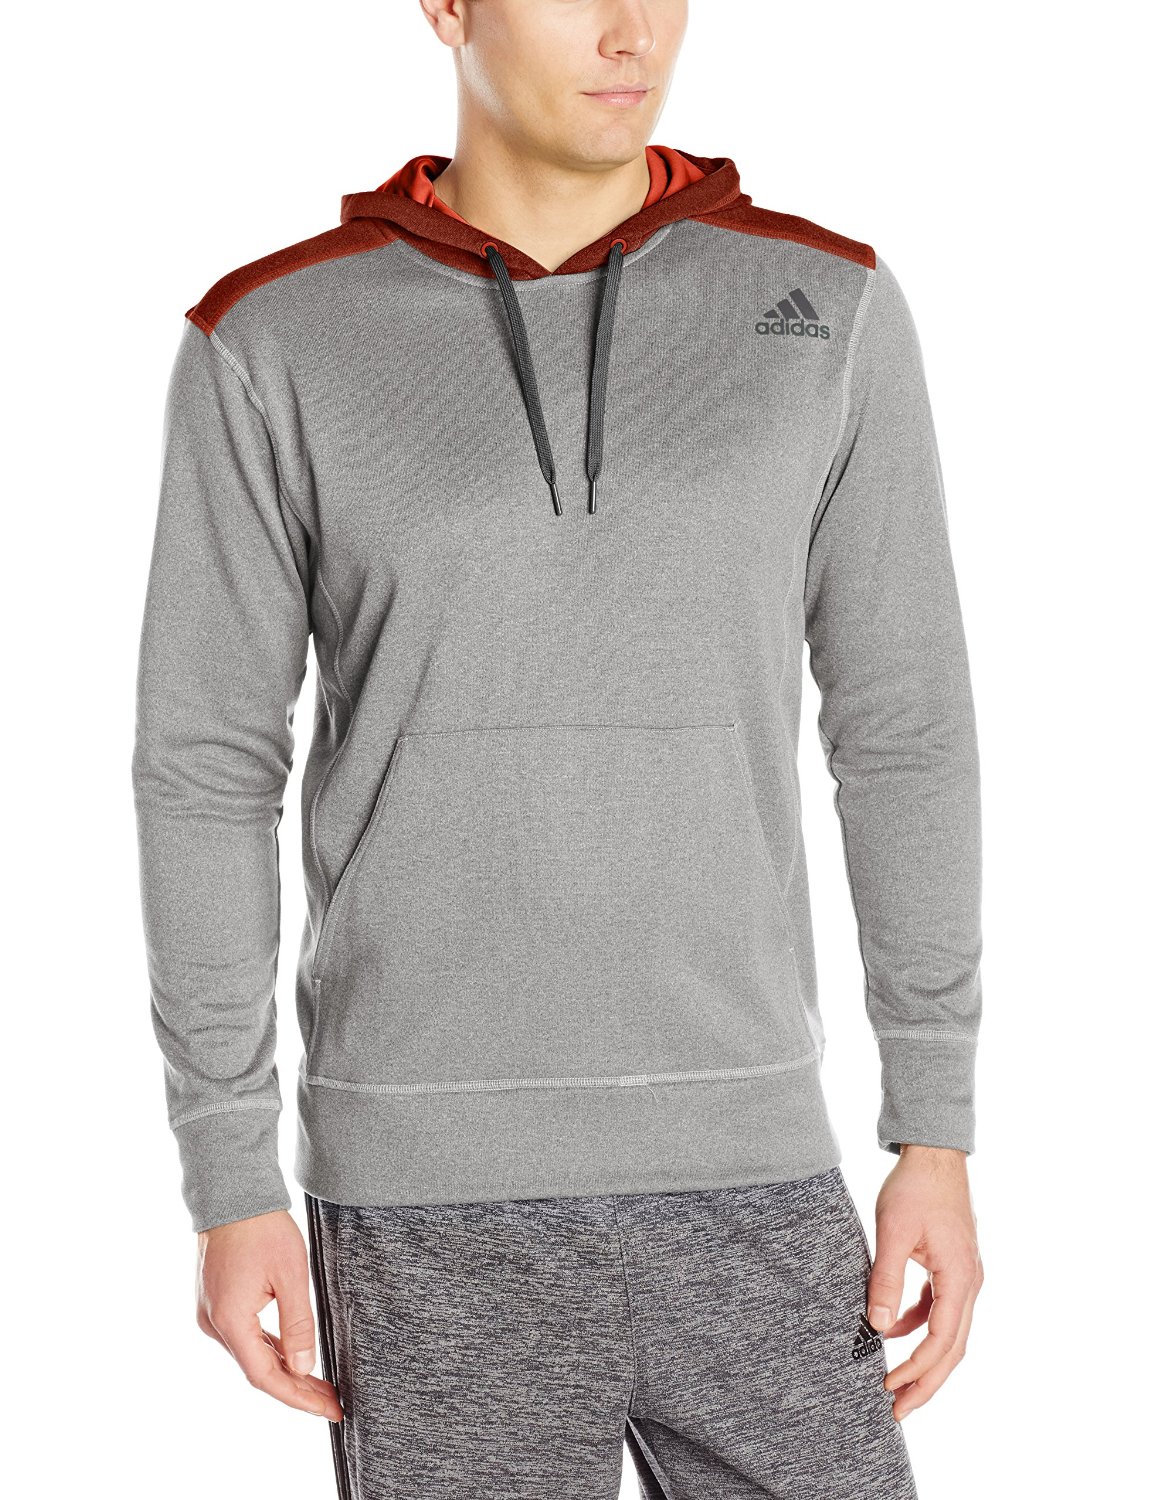 Adidas Performance Men's Ultimate Linear Logo Fleece Pullover Hoodie